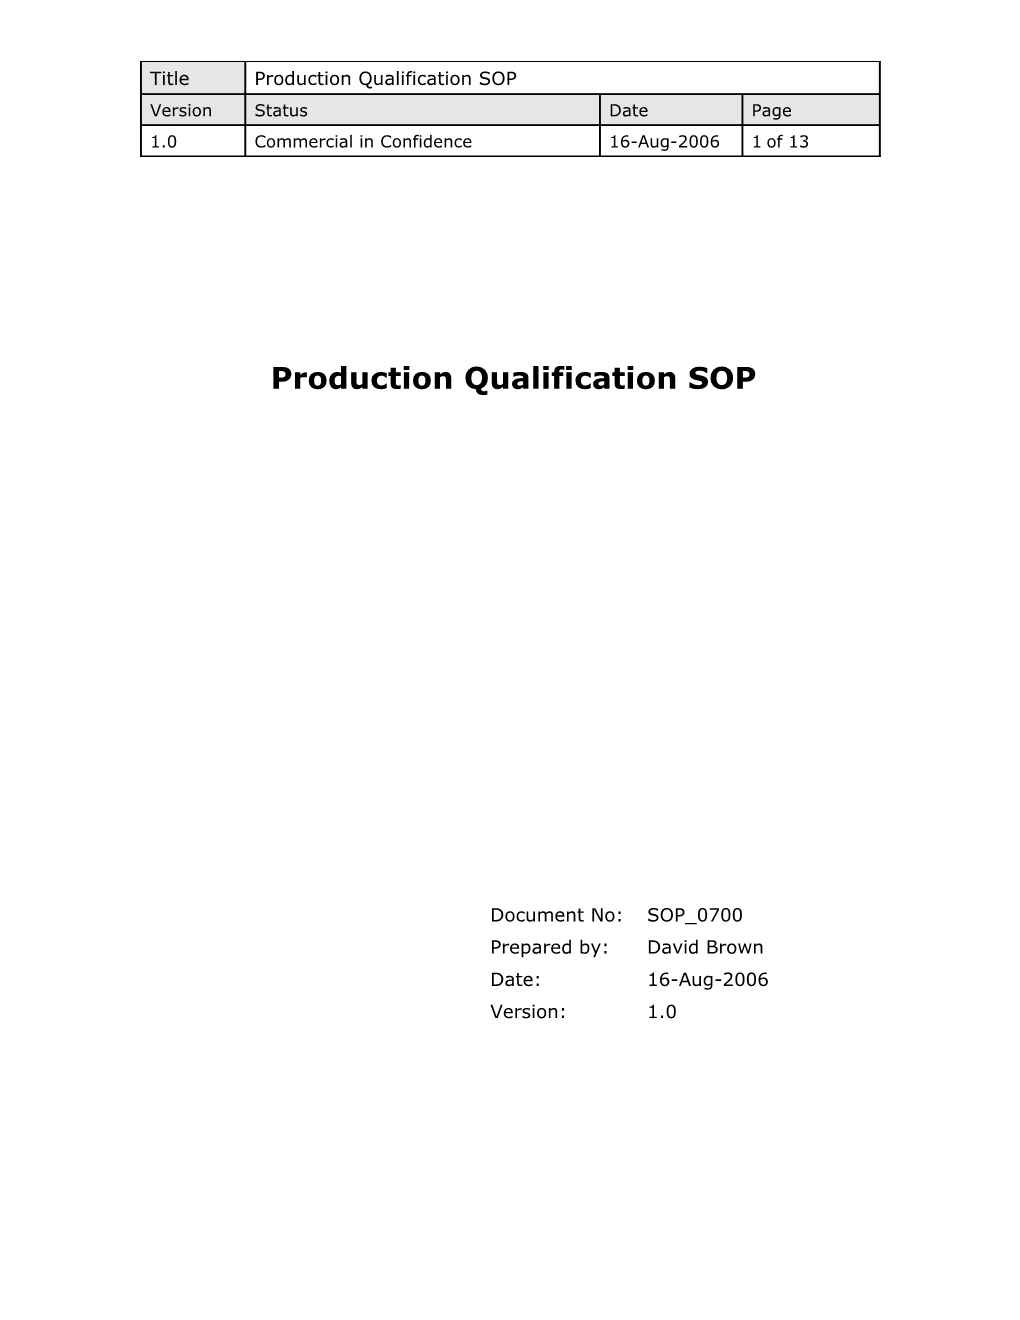 Production Qualification SOP